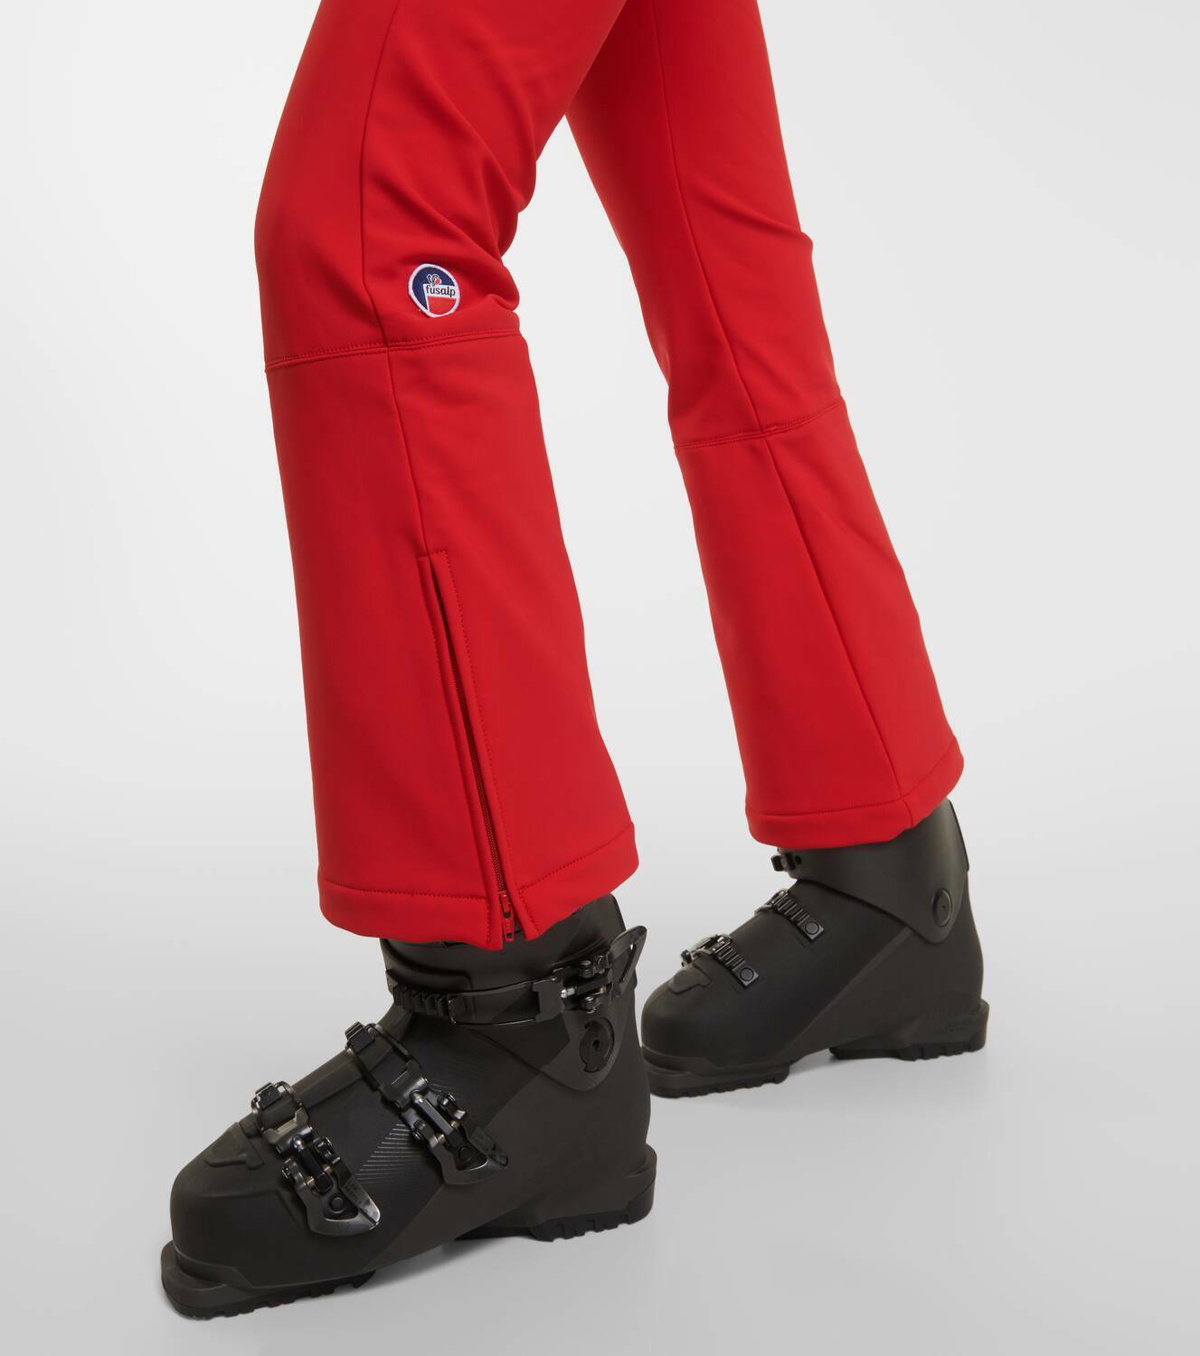 Belalp Fuseau stirrup ski pants in black - Fusalp